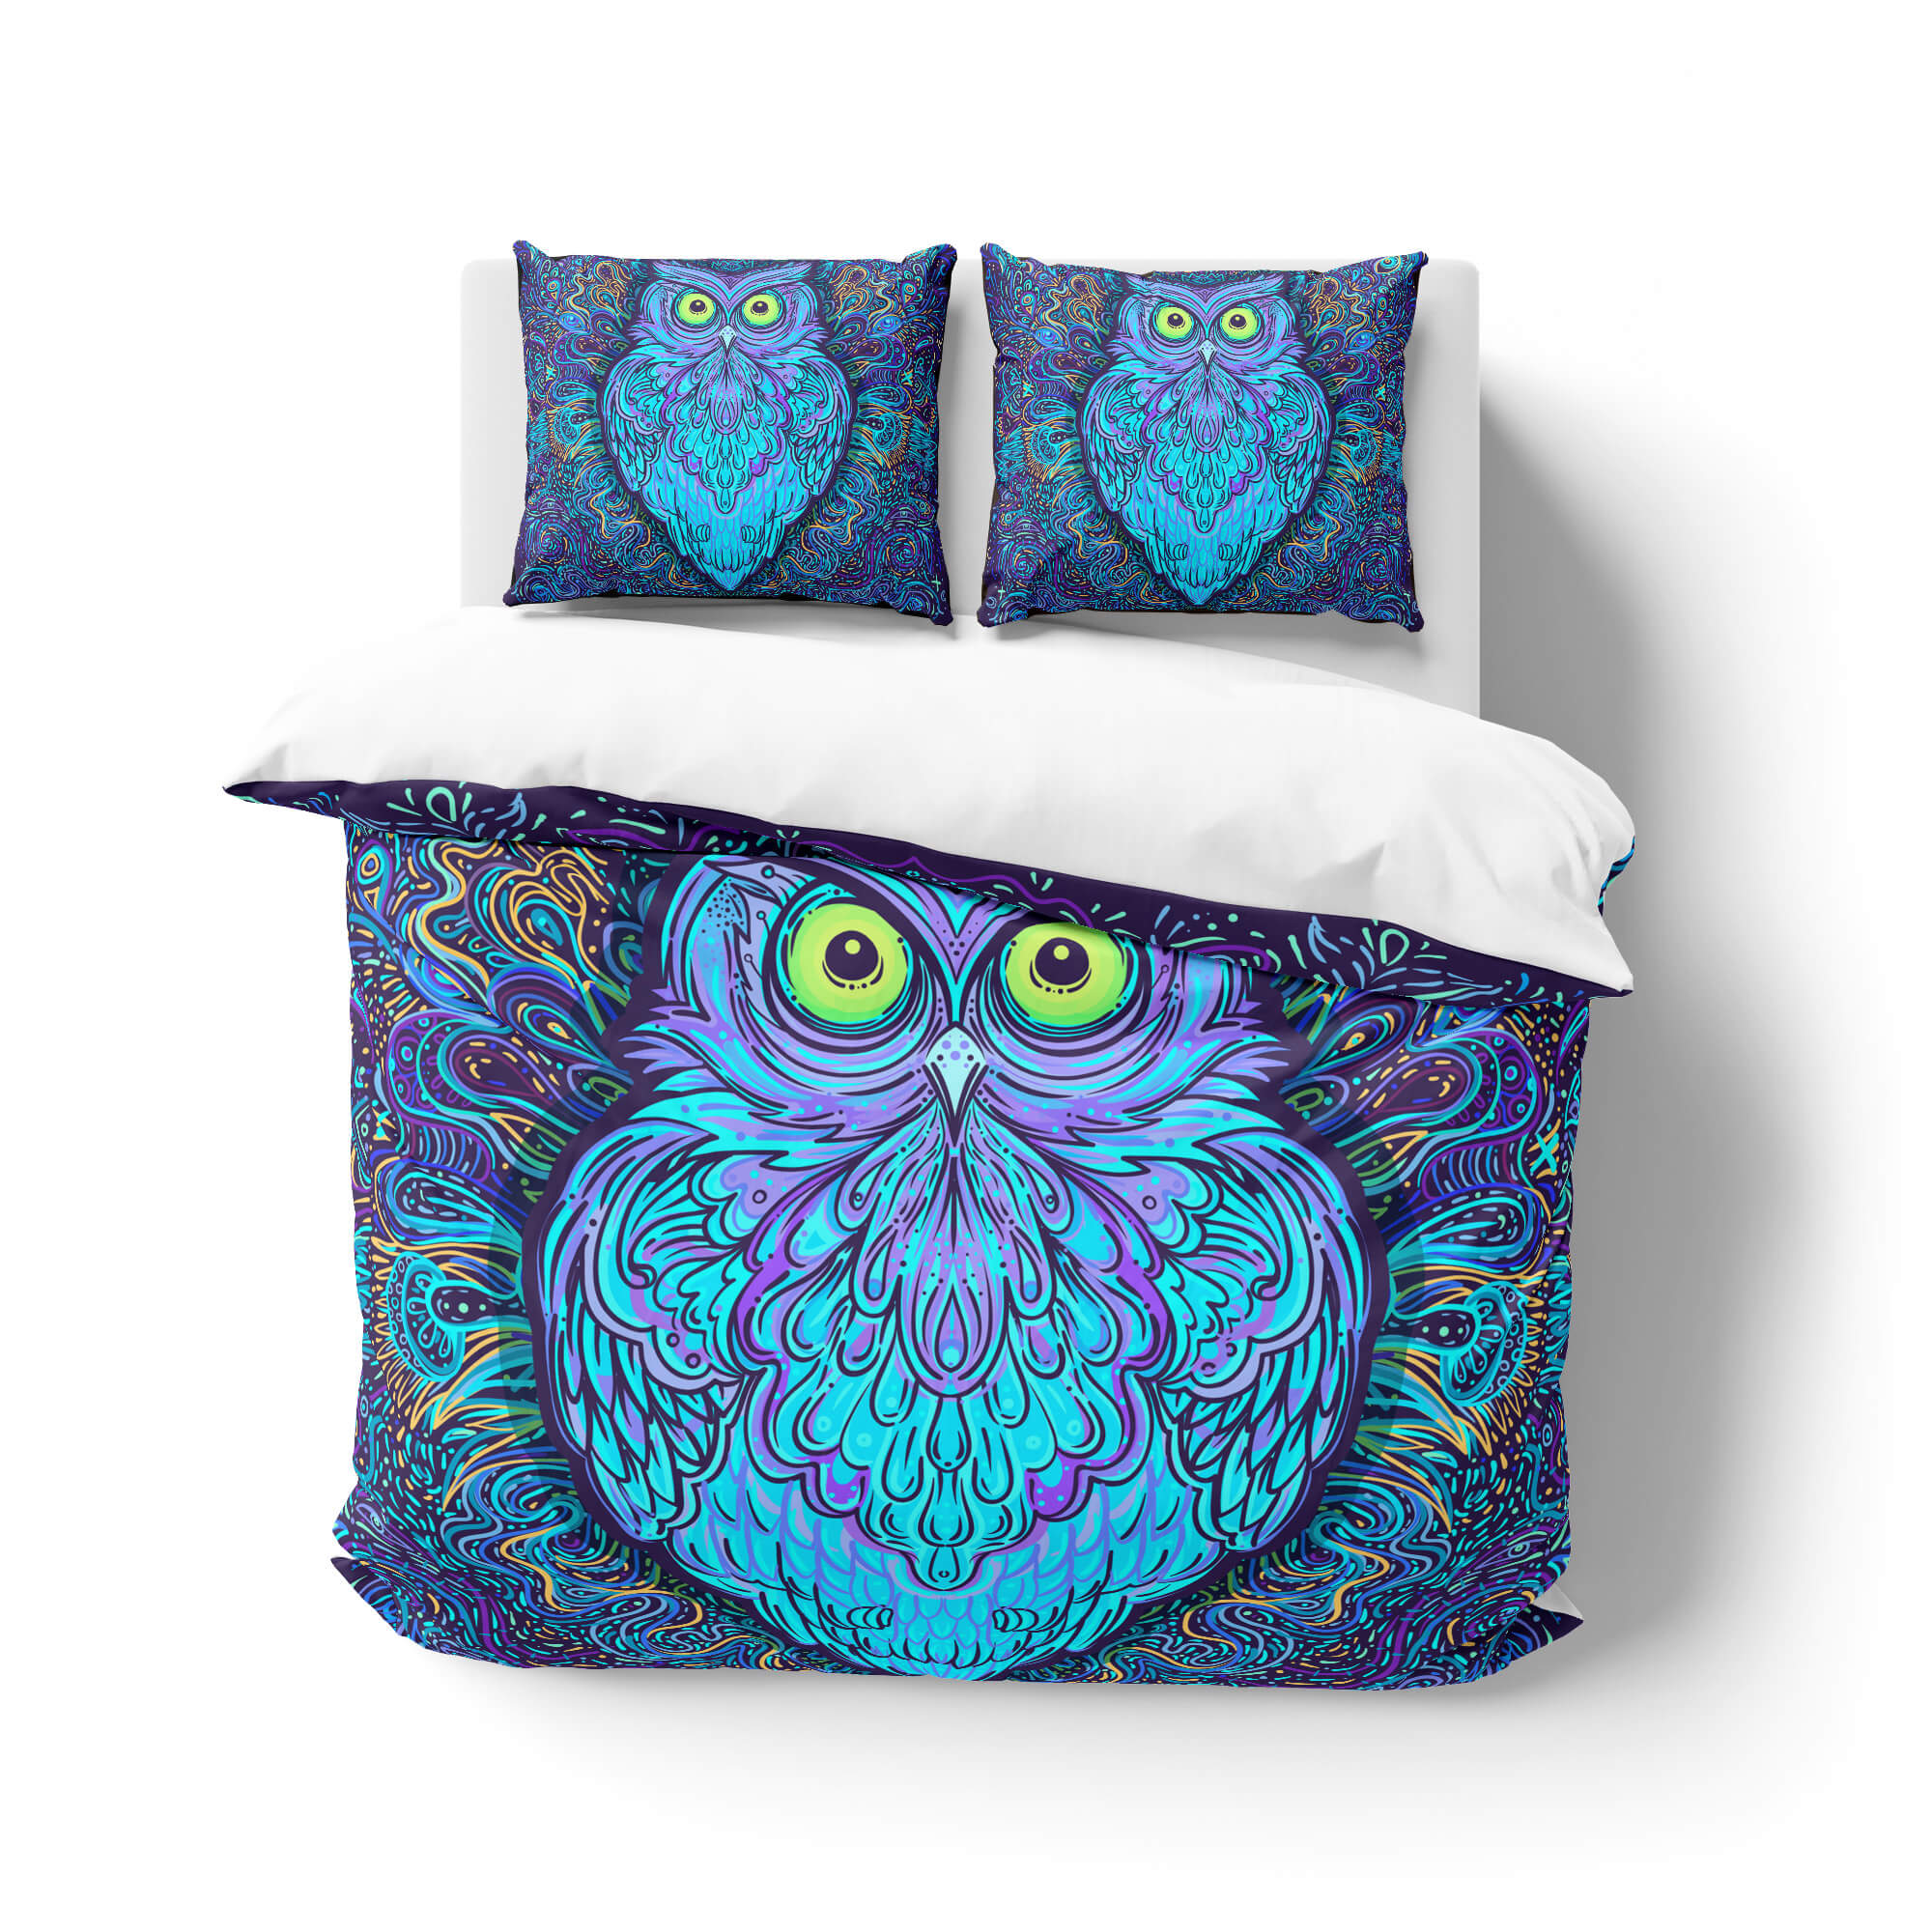 interdimensional-owl-bedding-set